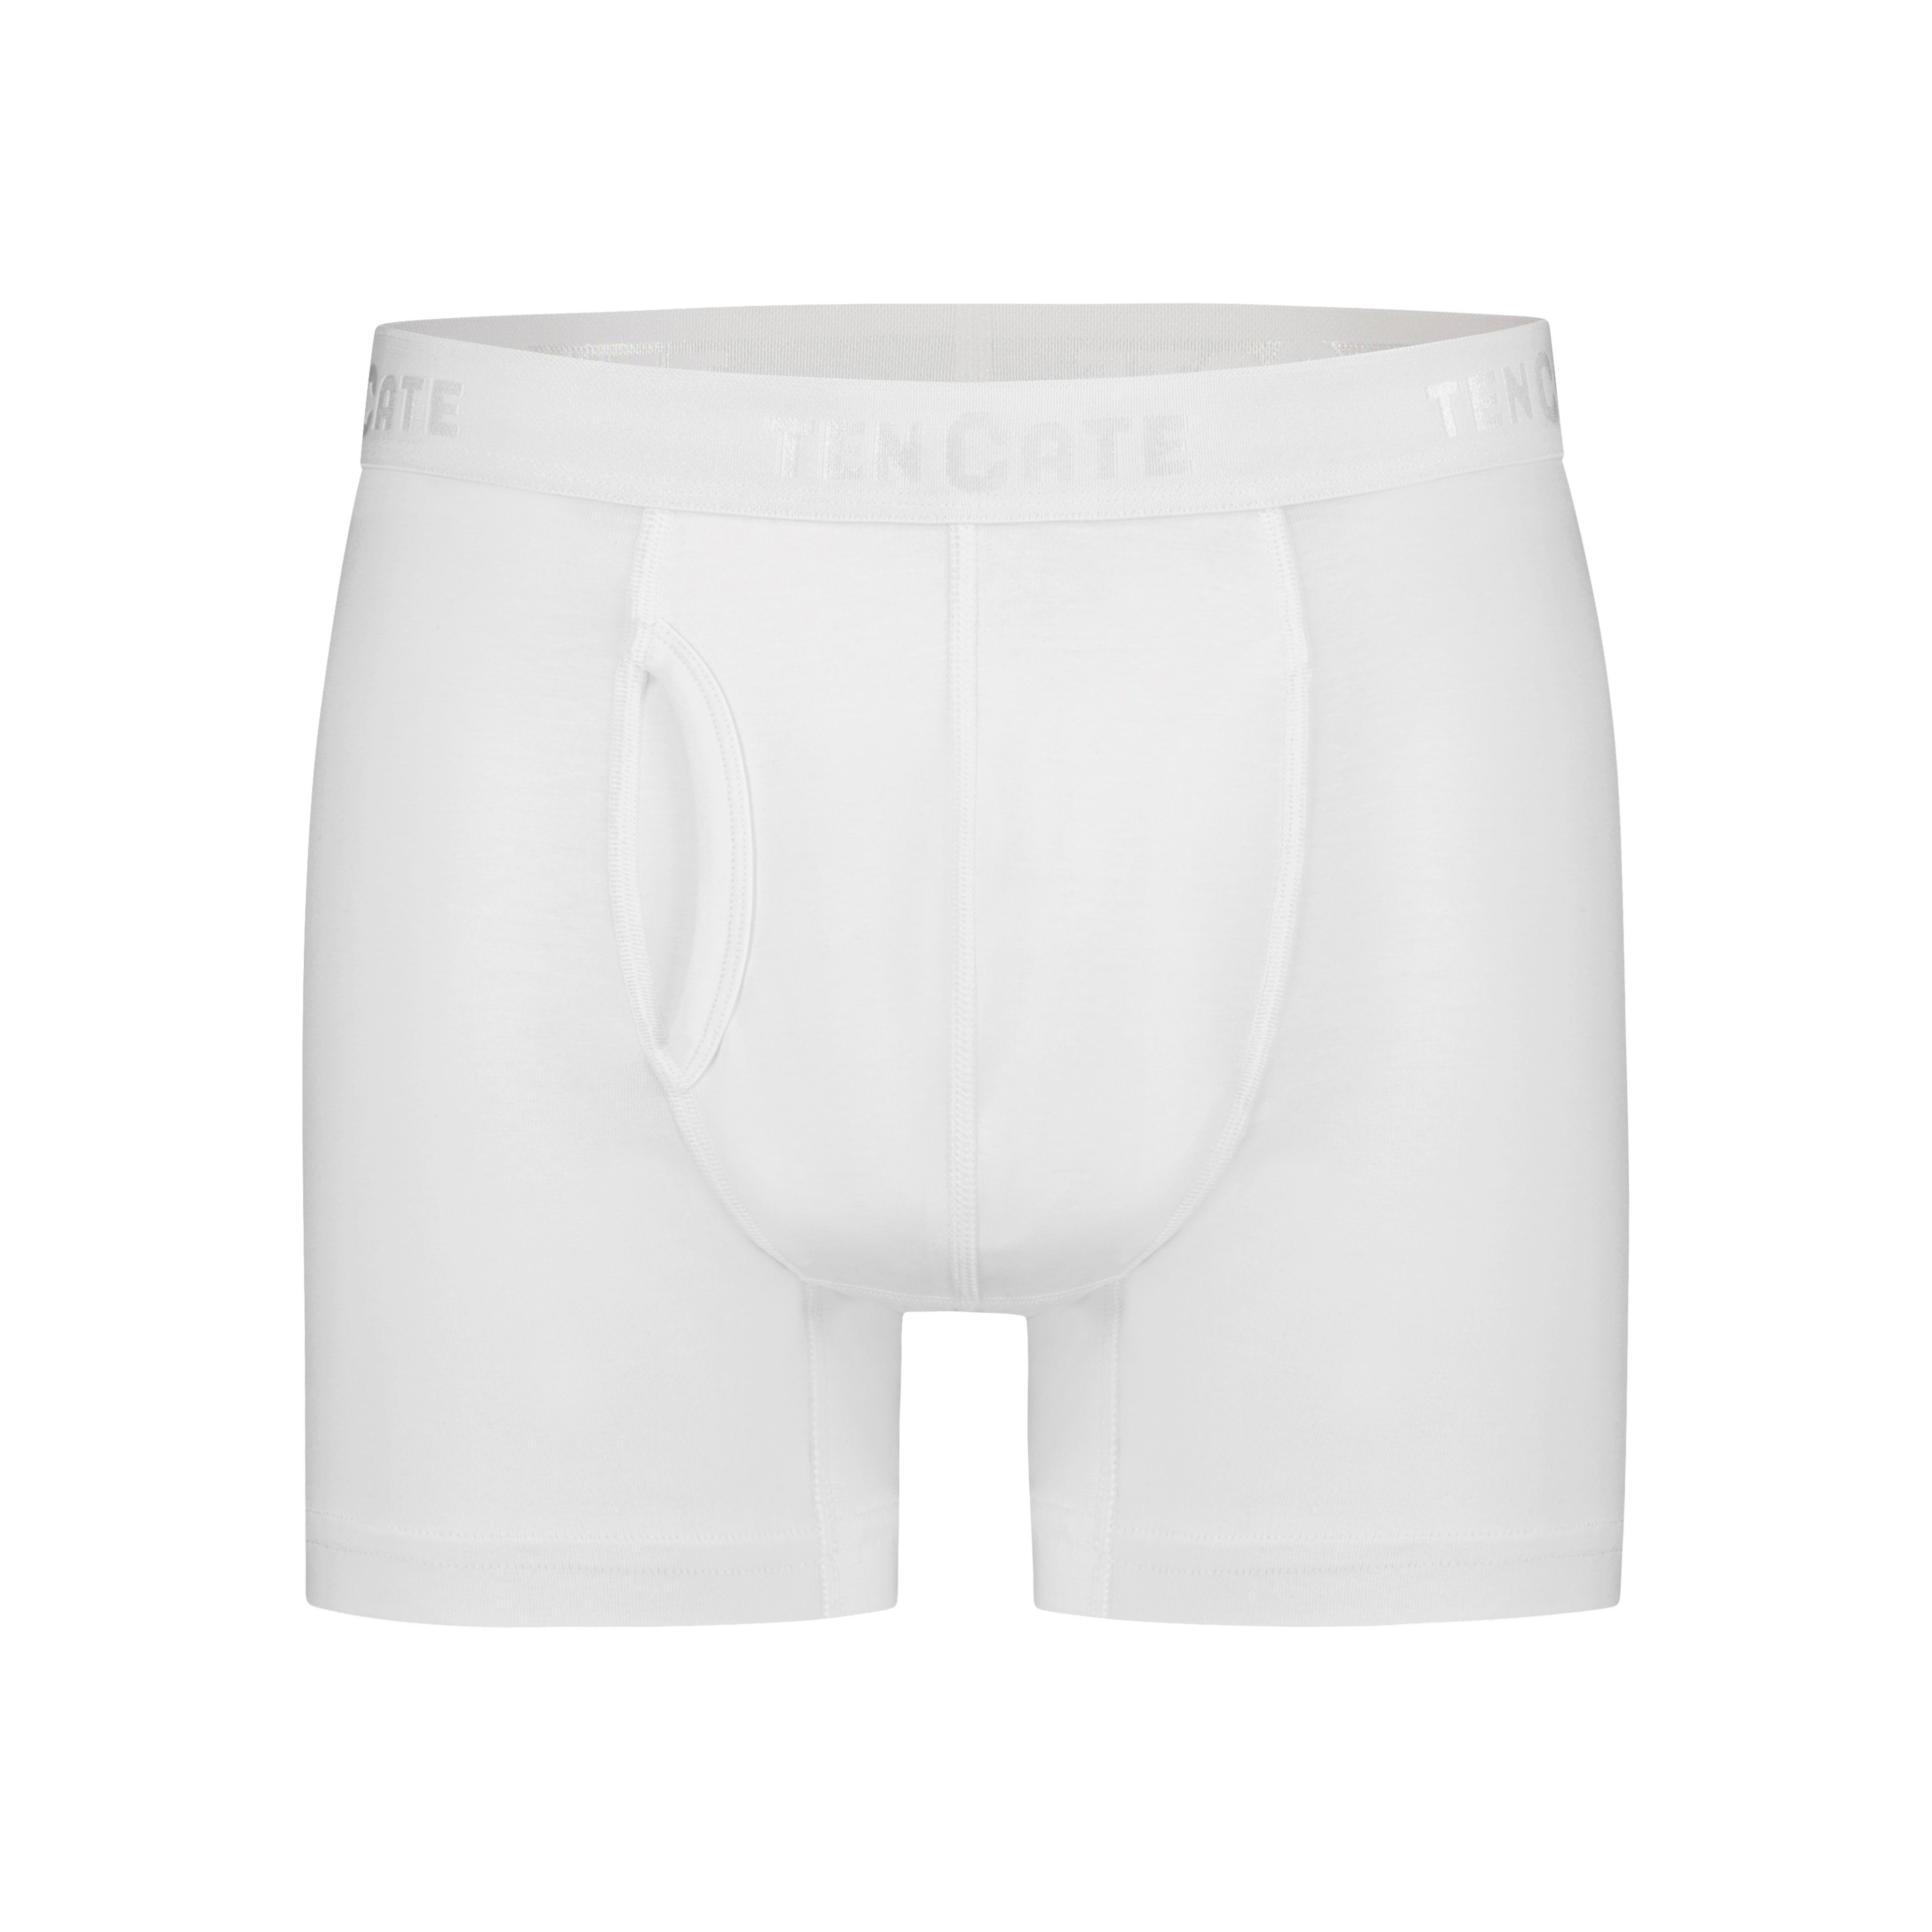 shorts met gulp wit 2 pack